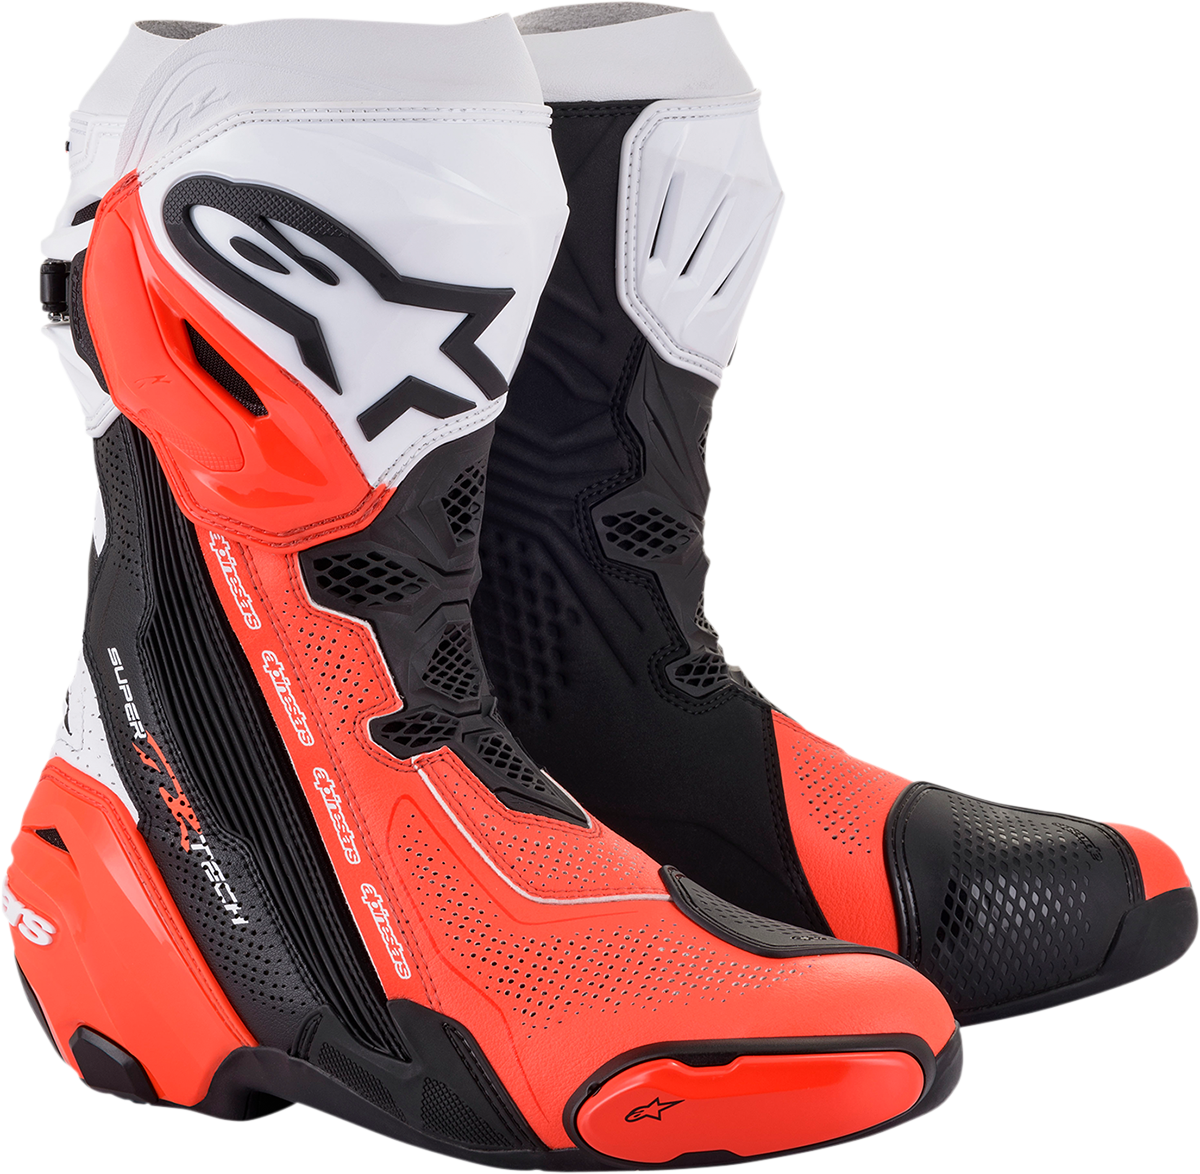 ALPINESTARS Supertech V Boots - Black/Fluo Red/White - US 7.5 / EU 41 2220121-124-41